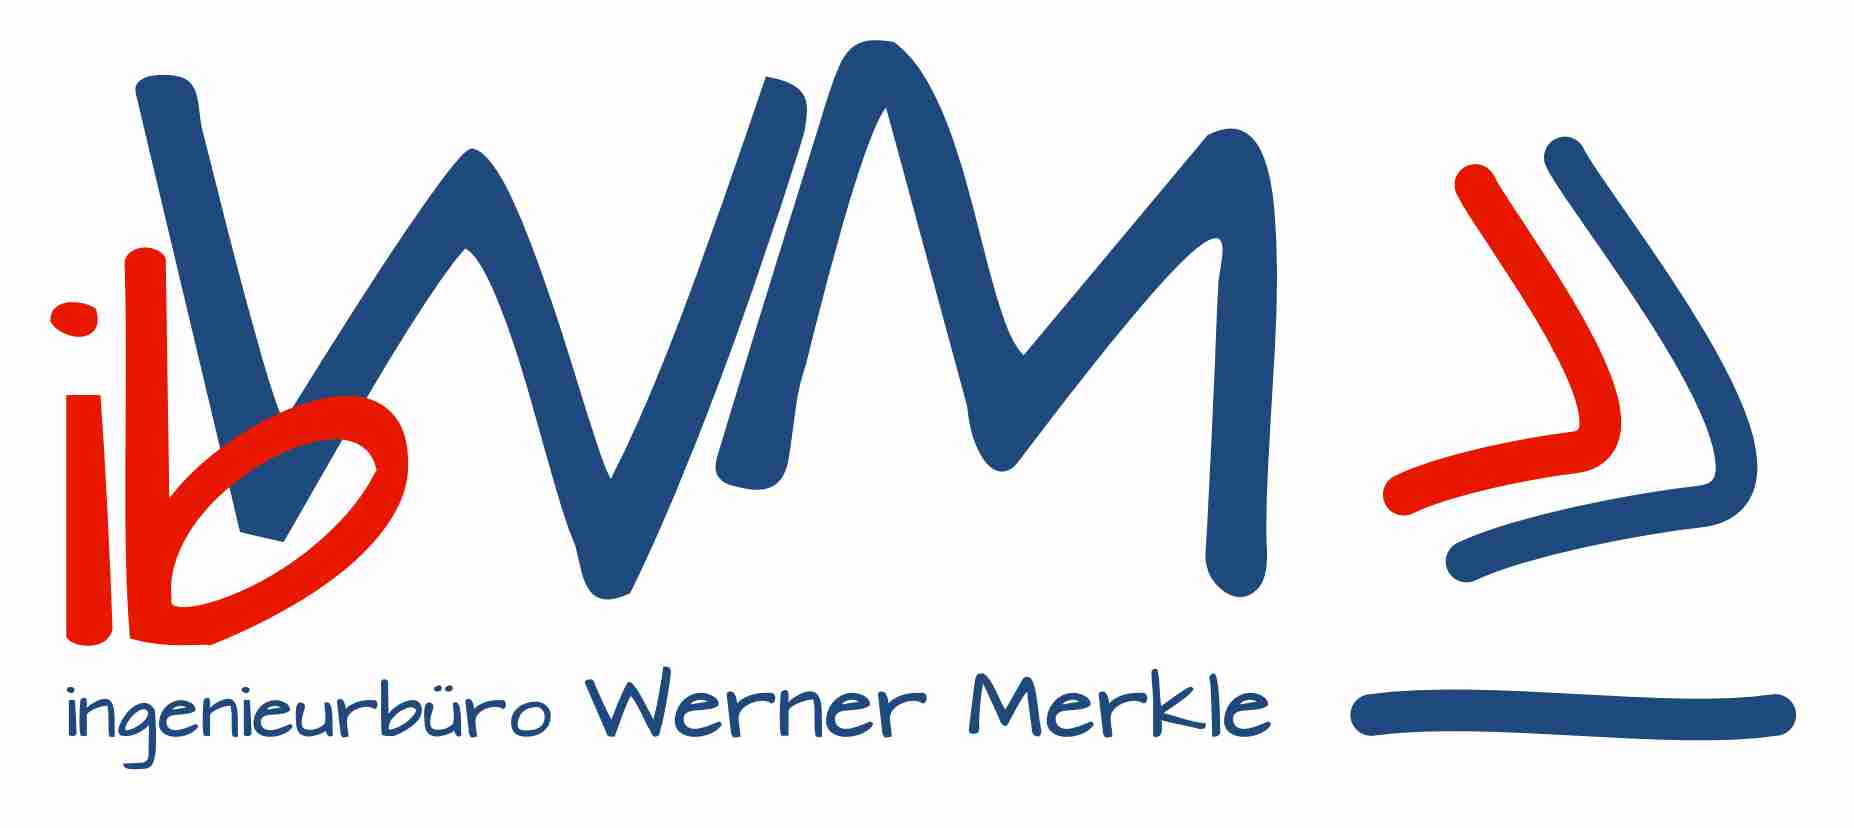 ibWM ingenieurbüro Werner Merkle - Energieberatung